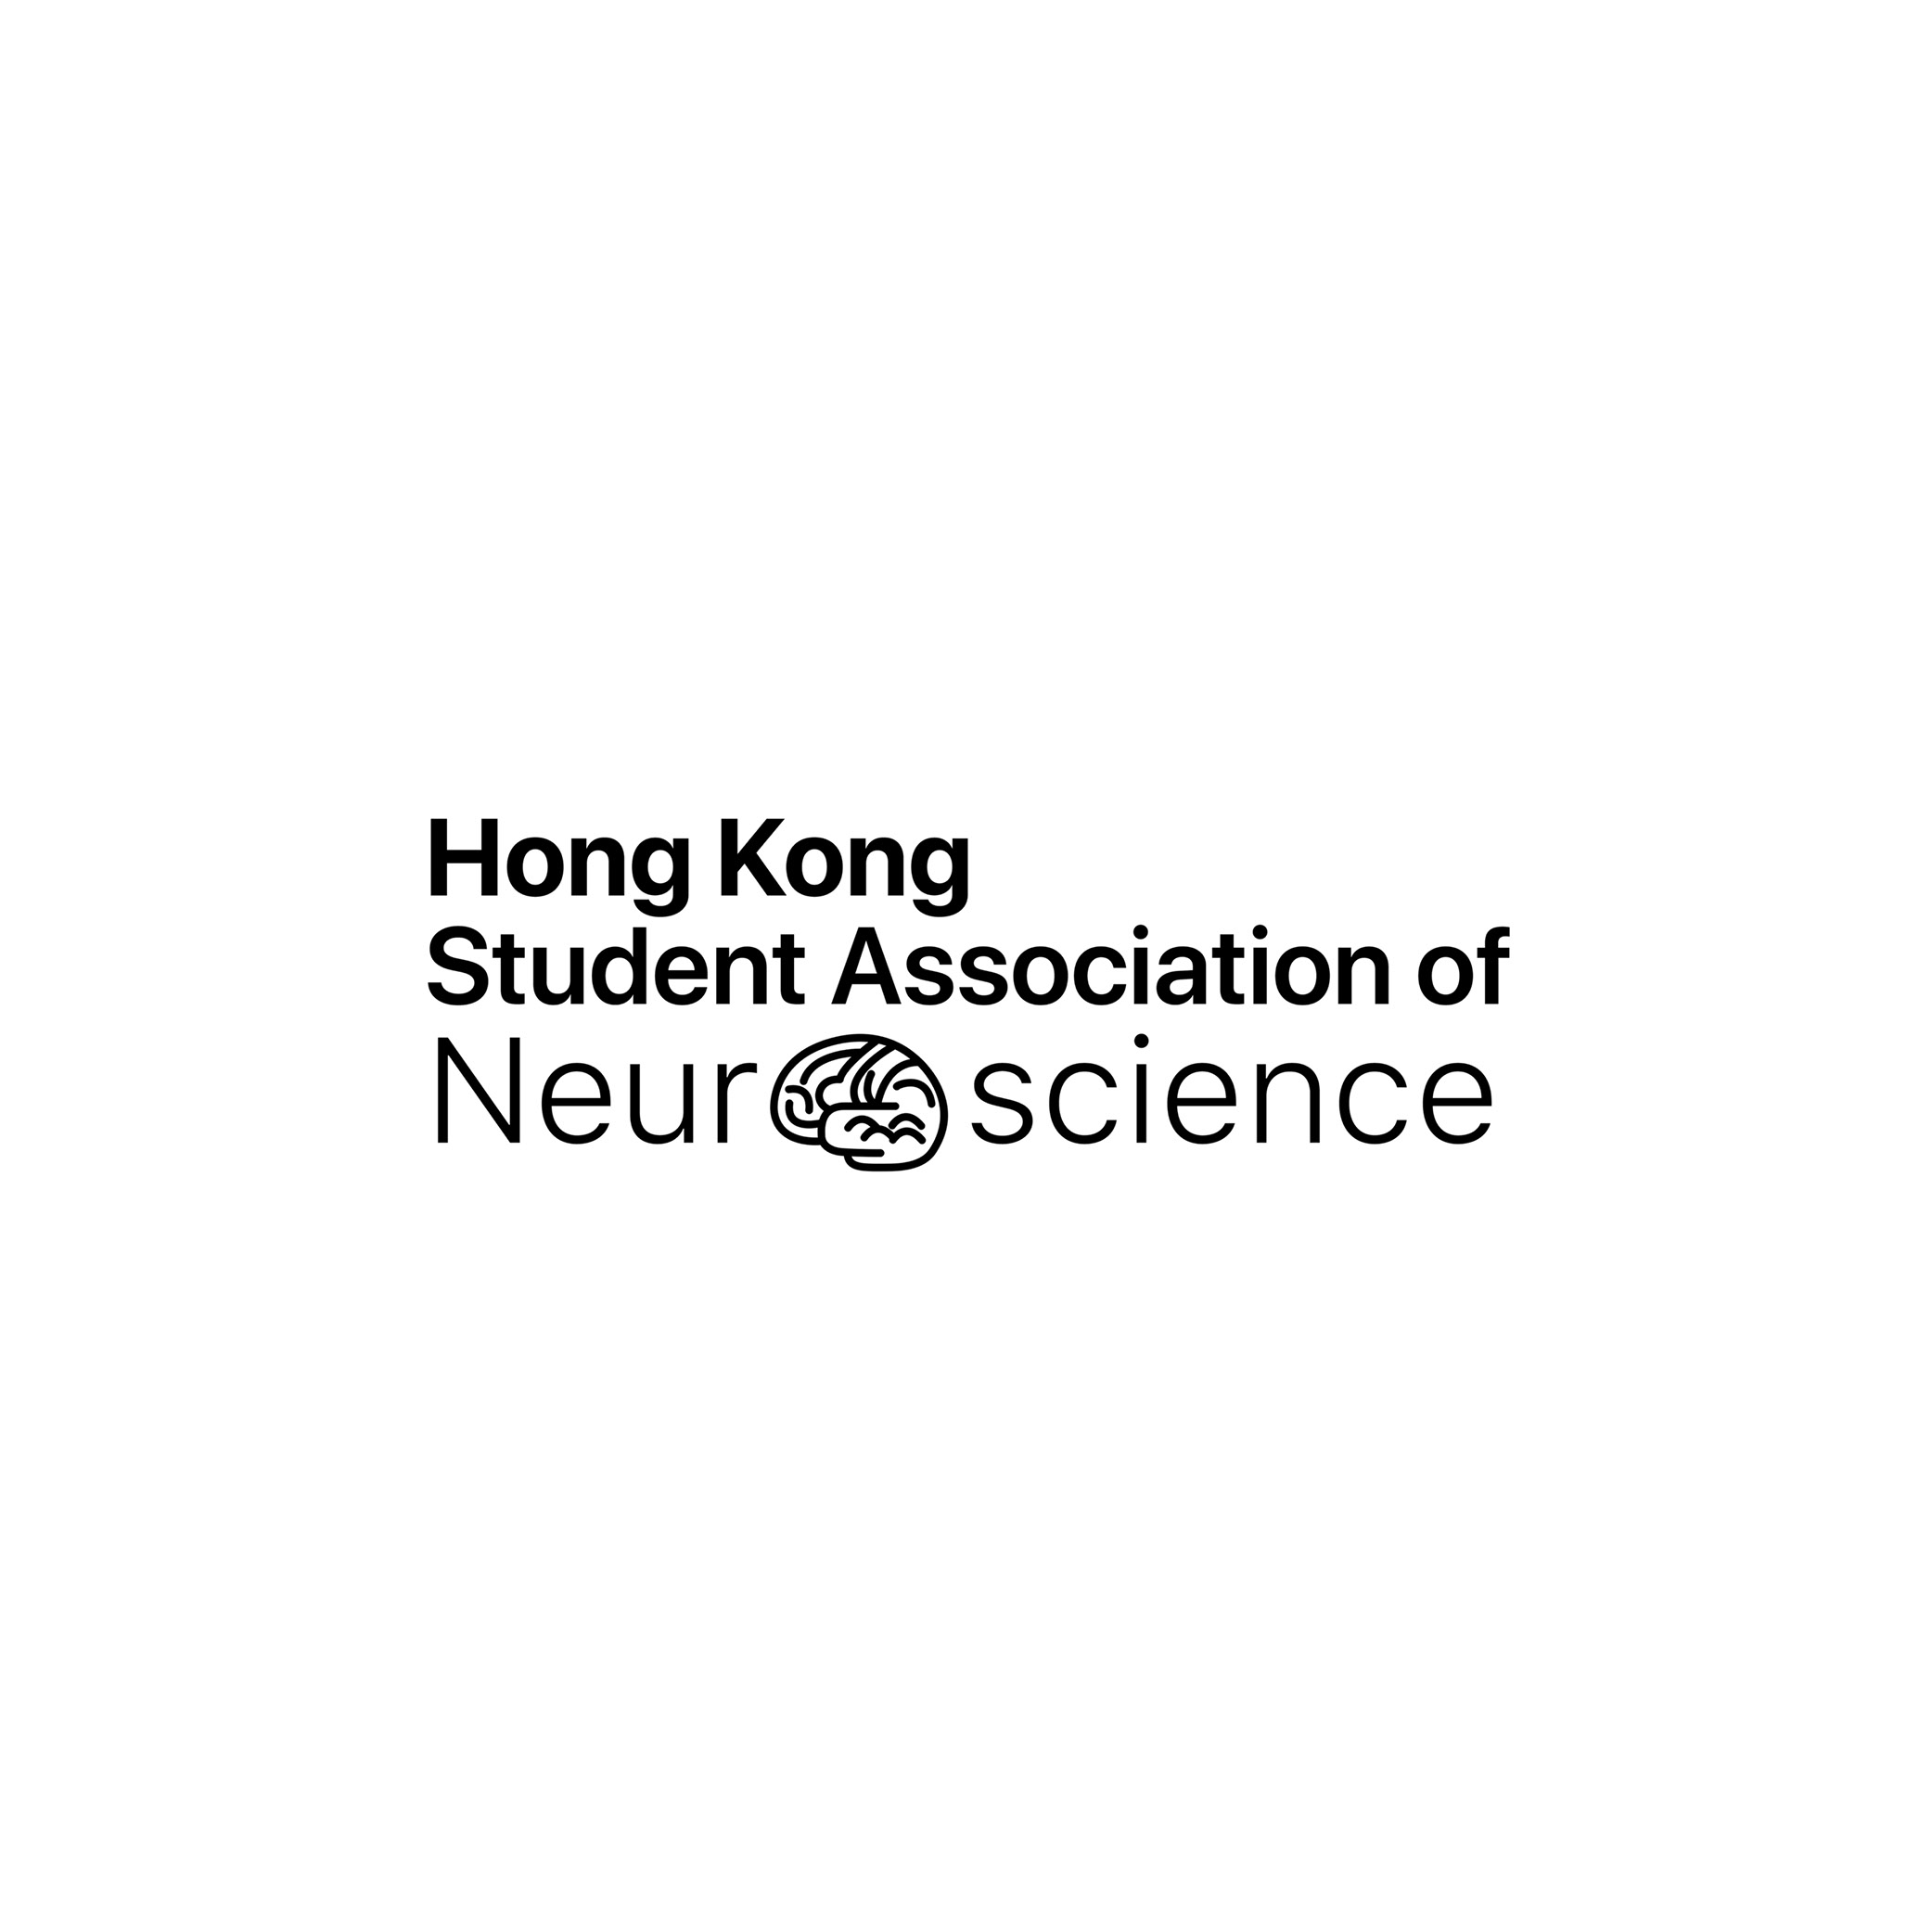 學生組織「Hong Kong Student Association of Neuroscience」的標誌